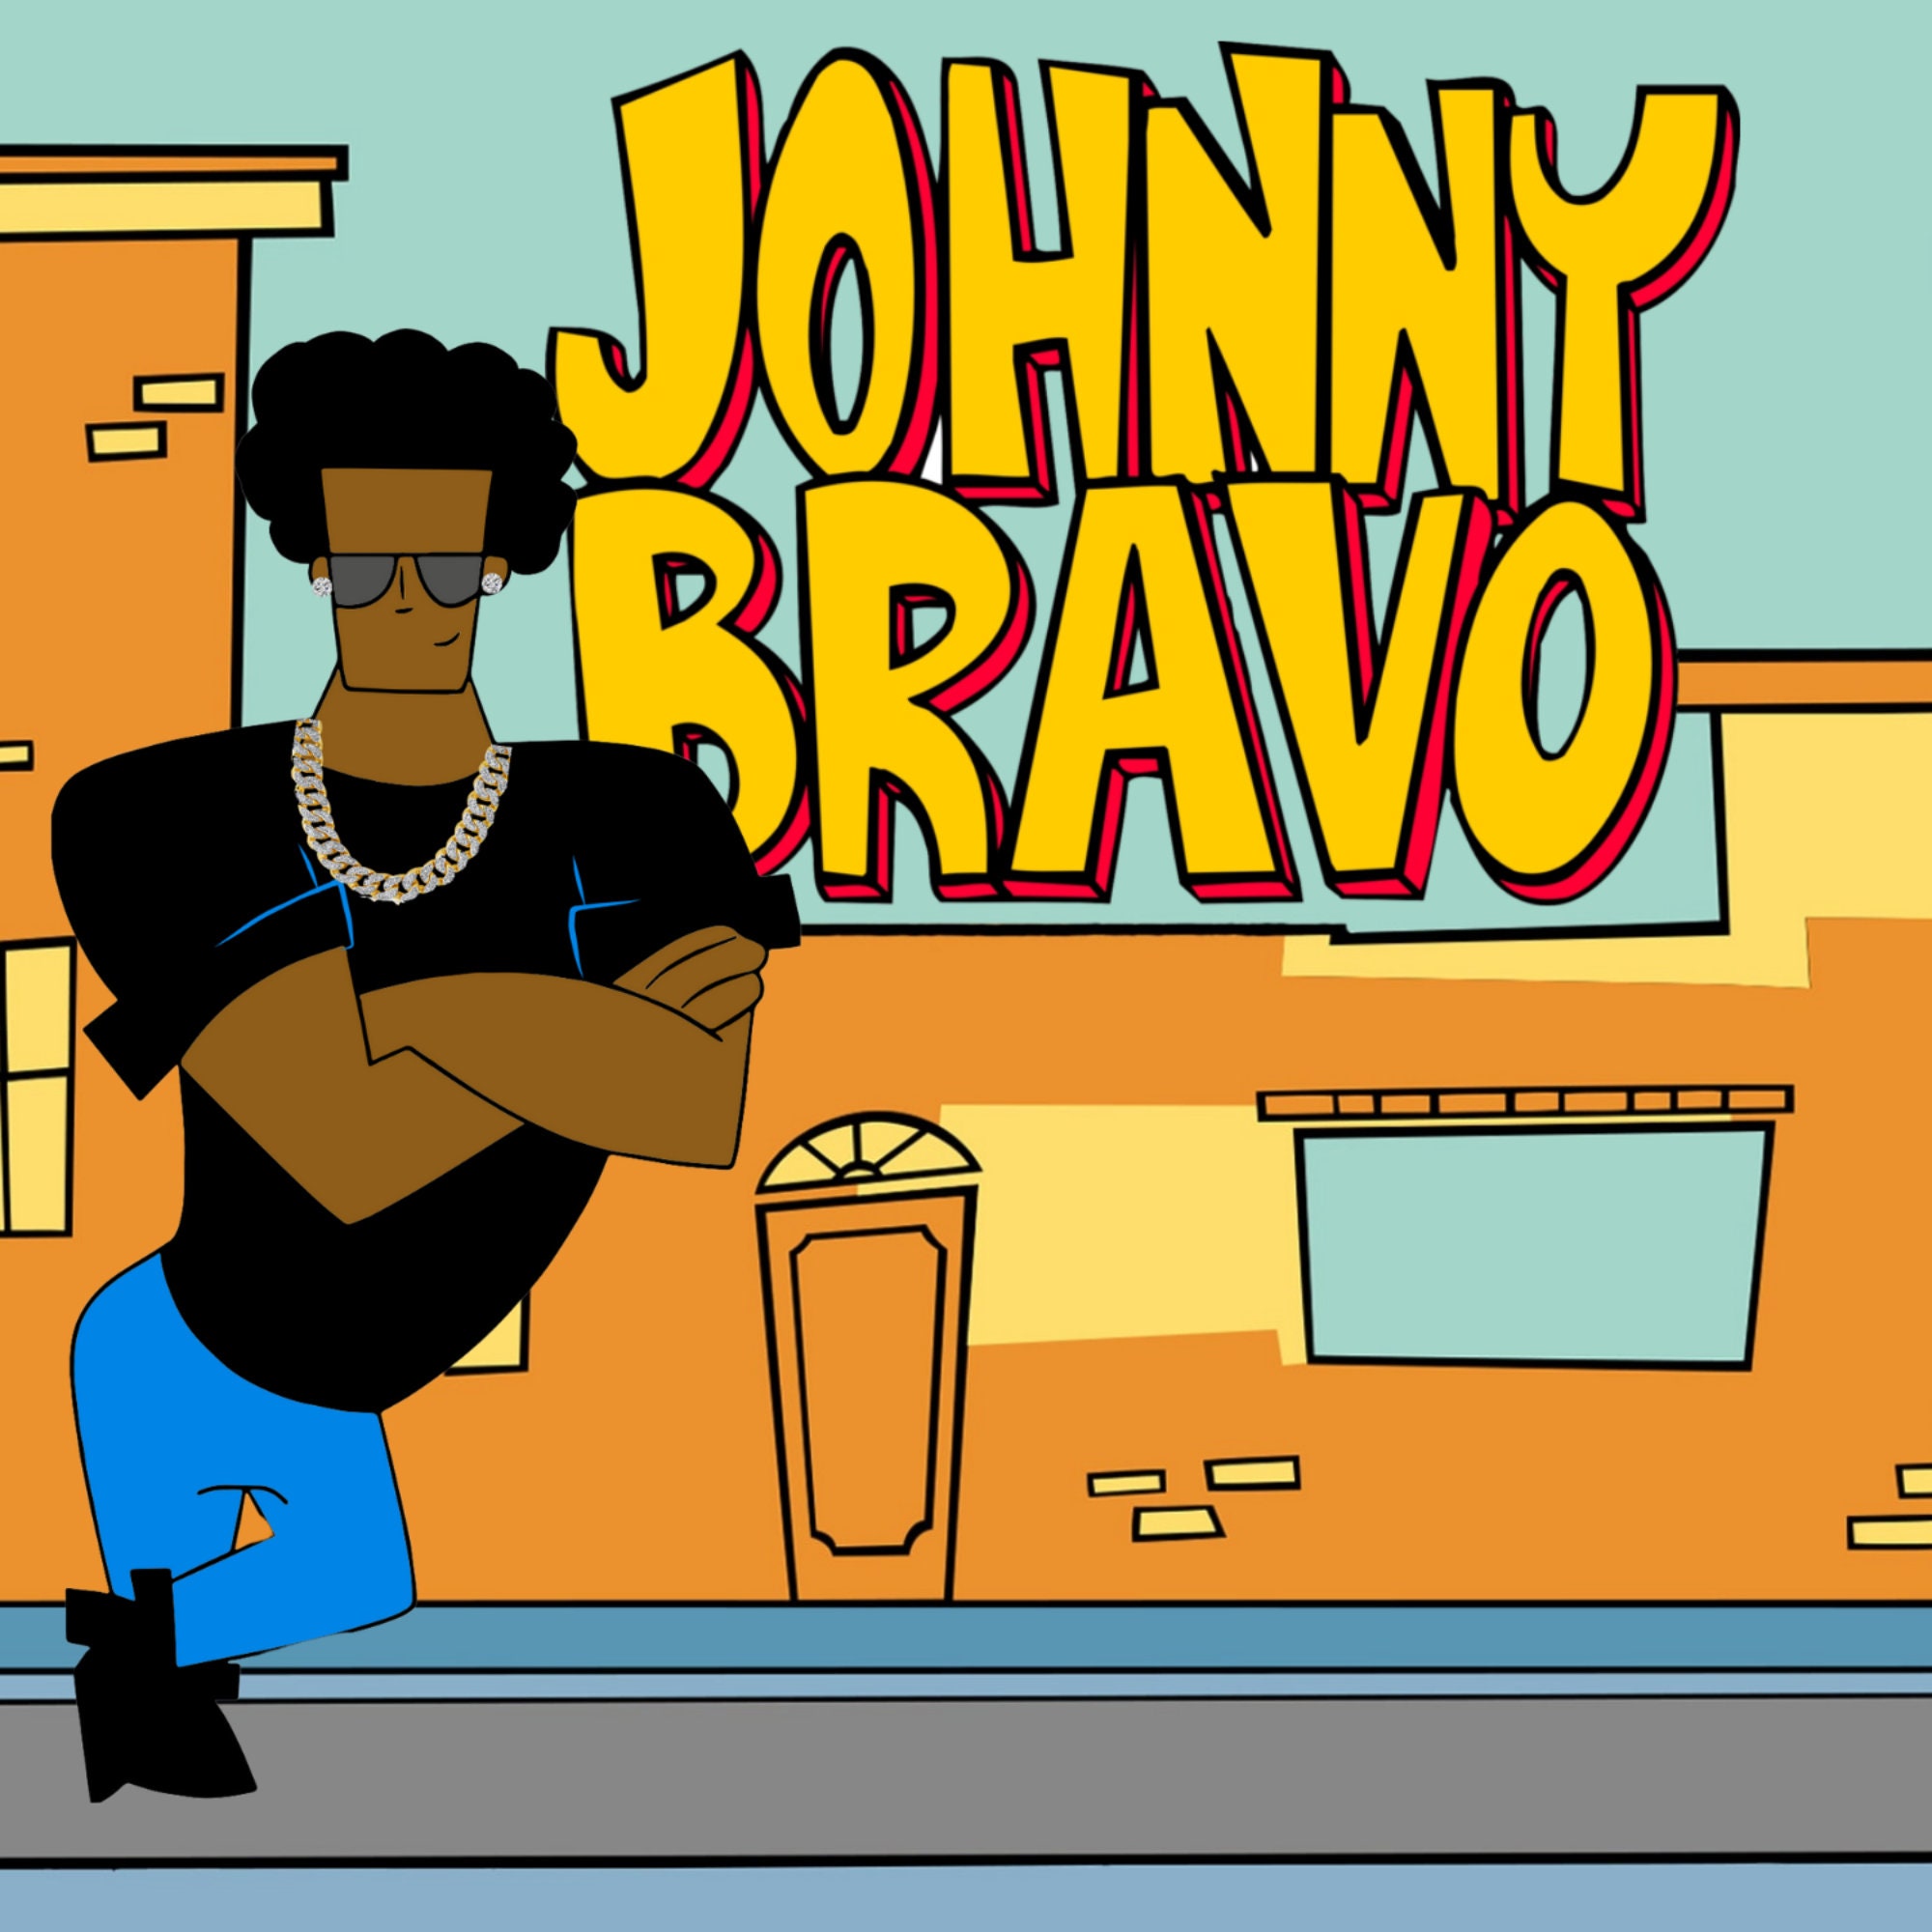 Johnny Bravo Logo PNG Transparent & SVG Vector - Freebie Supply